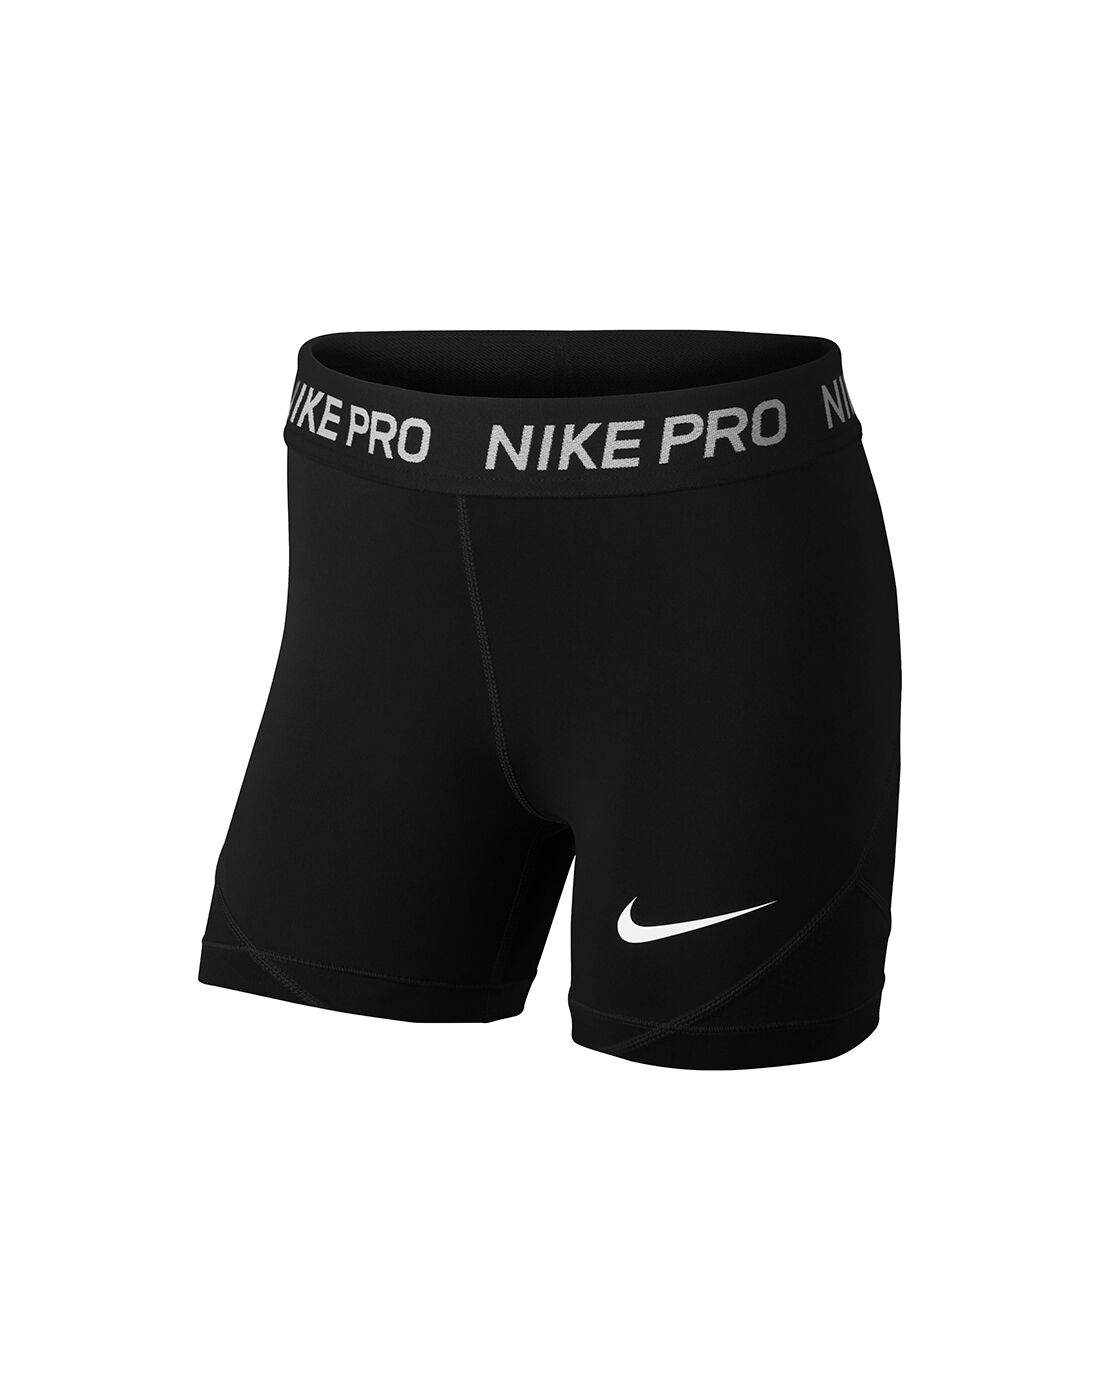 nike pro shorts girls cheap